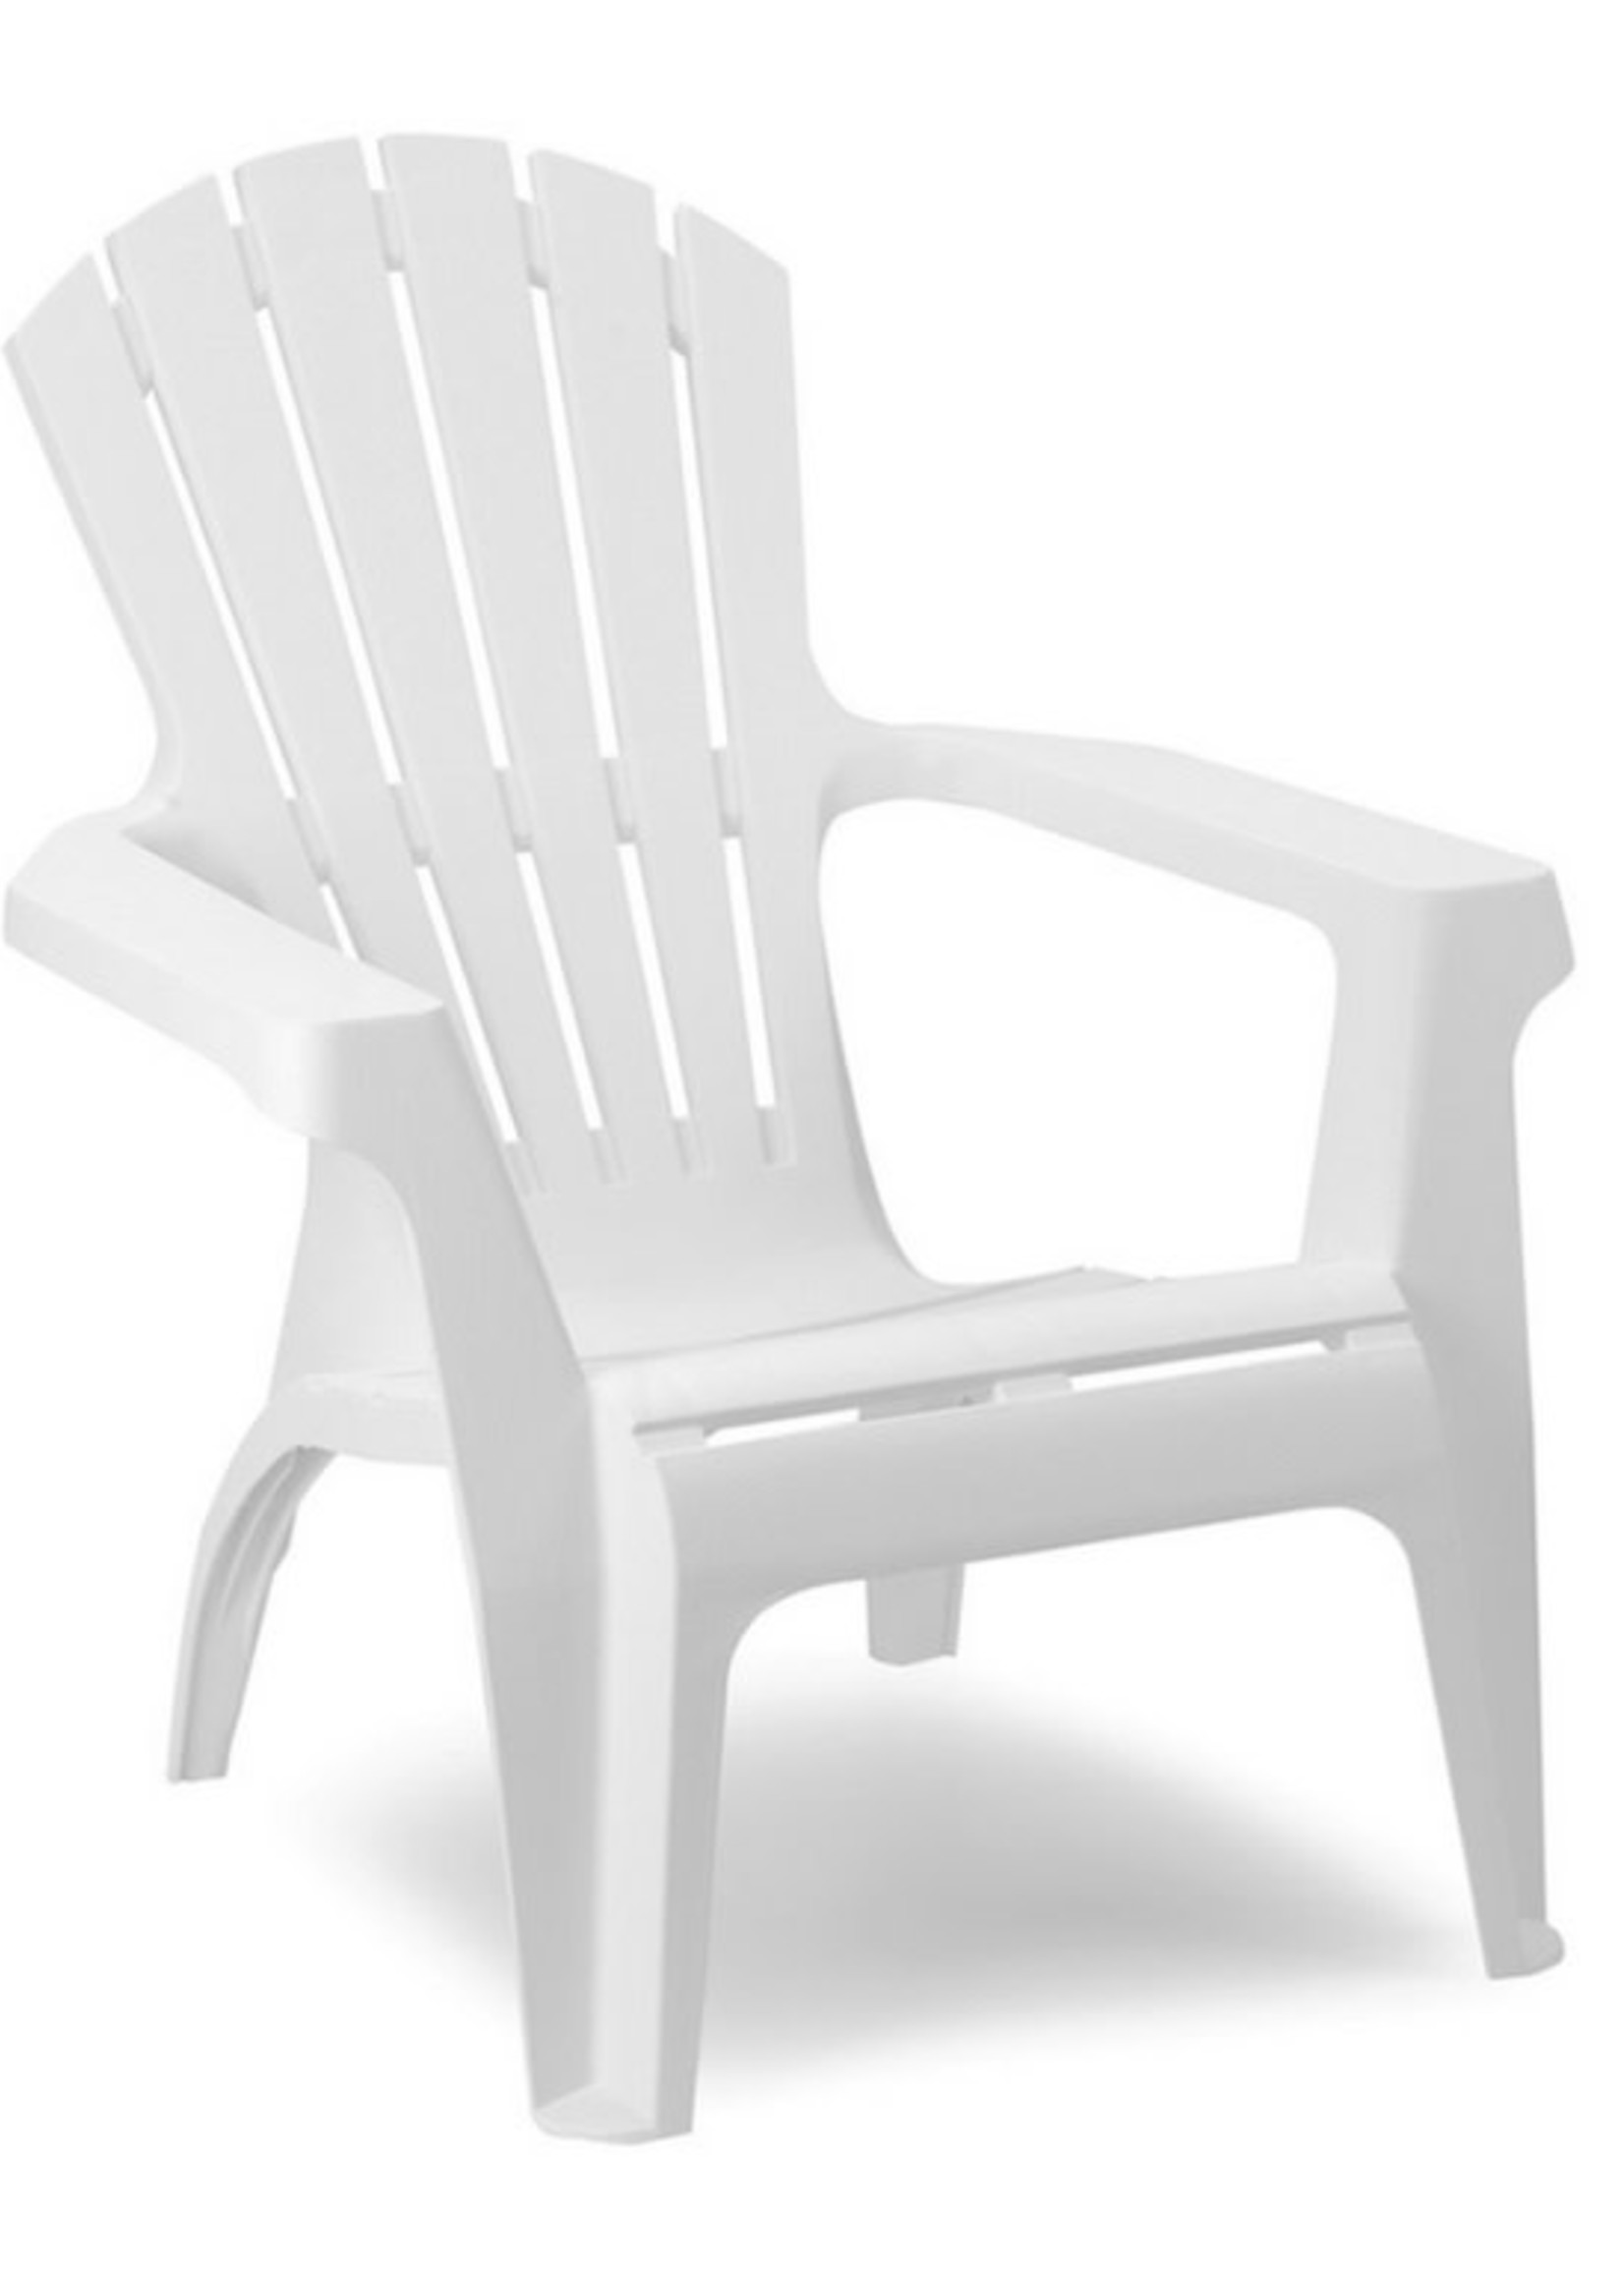 SupaGarden SupaGarden Plastic Stackable Arm Chair White